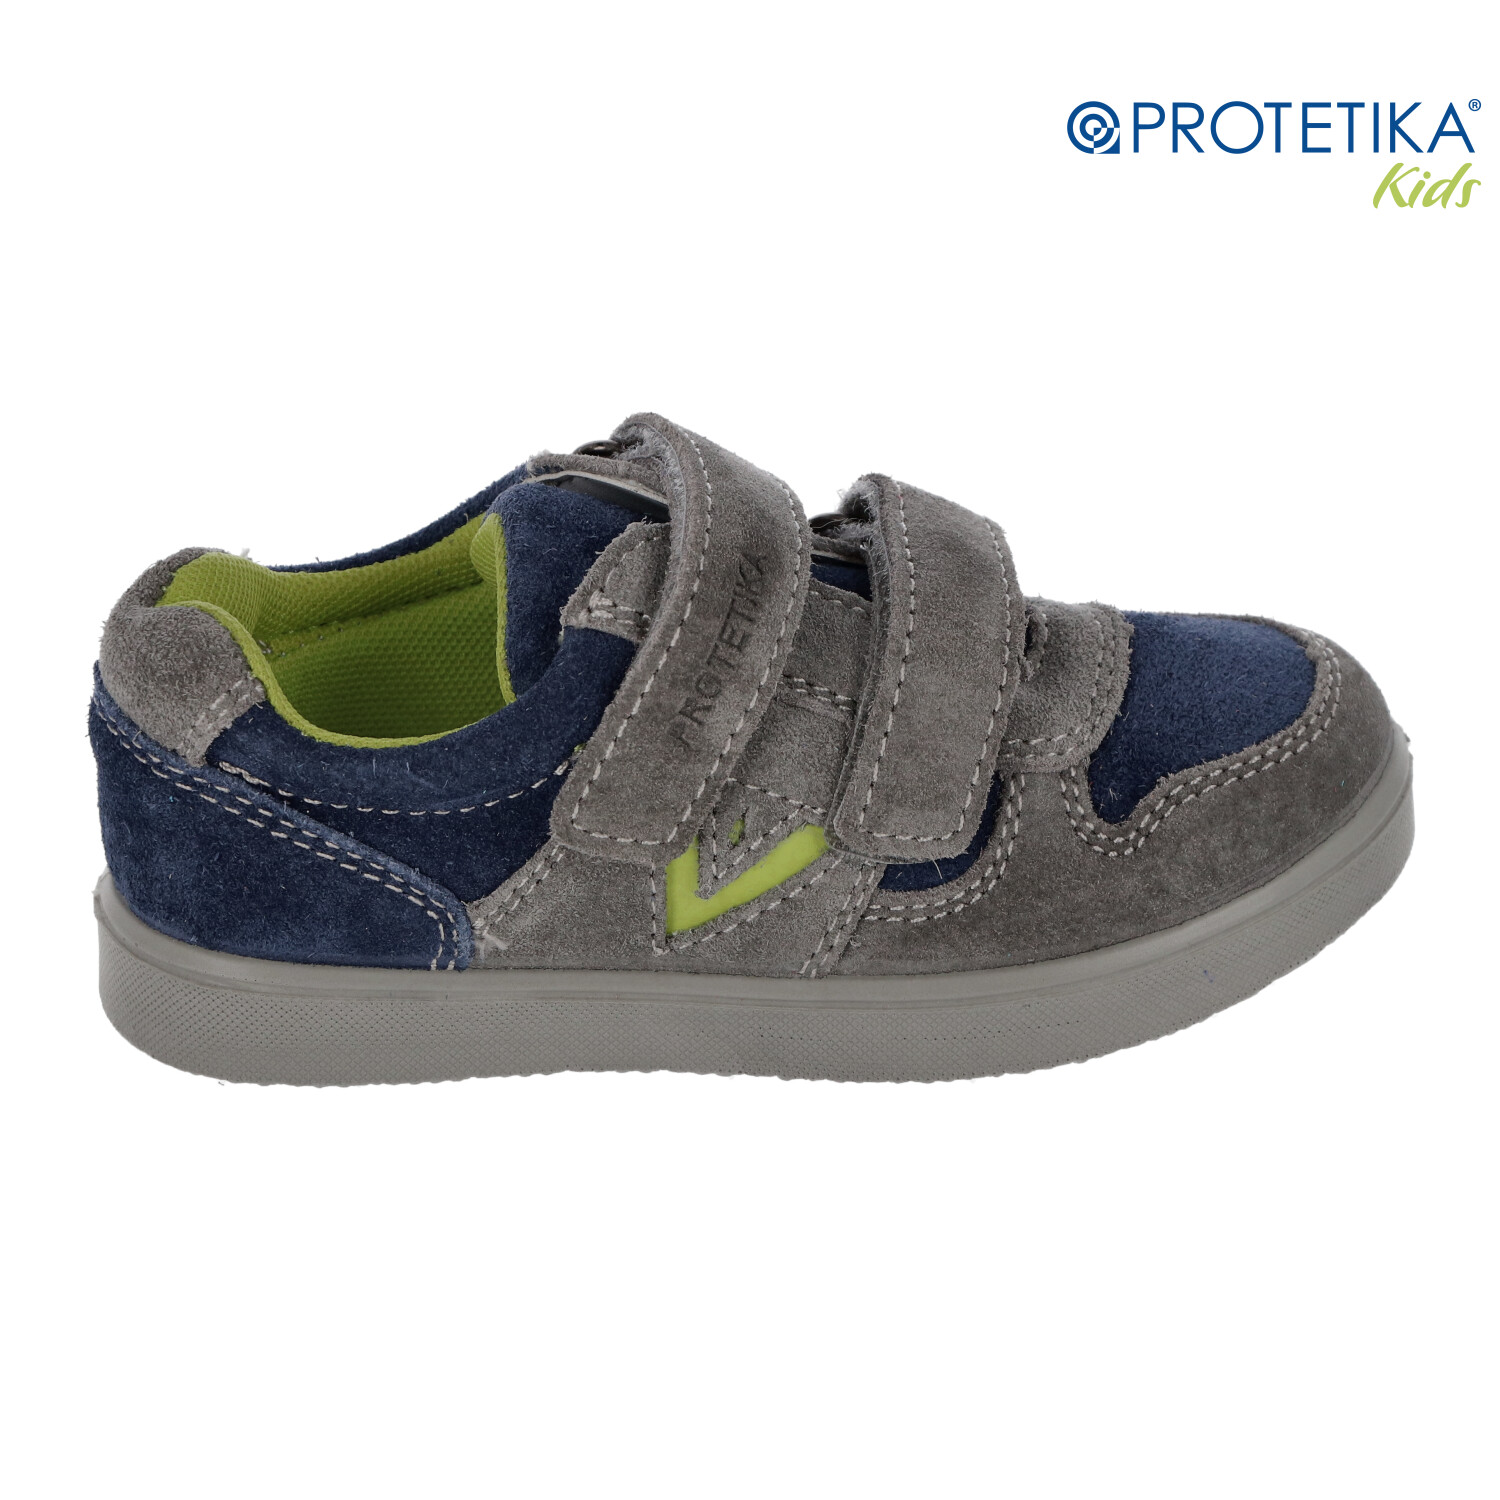 Protetika - topánky s membránou PRO-tex AROX navy